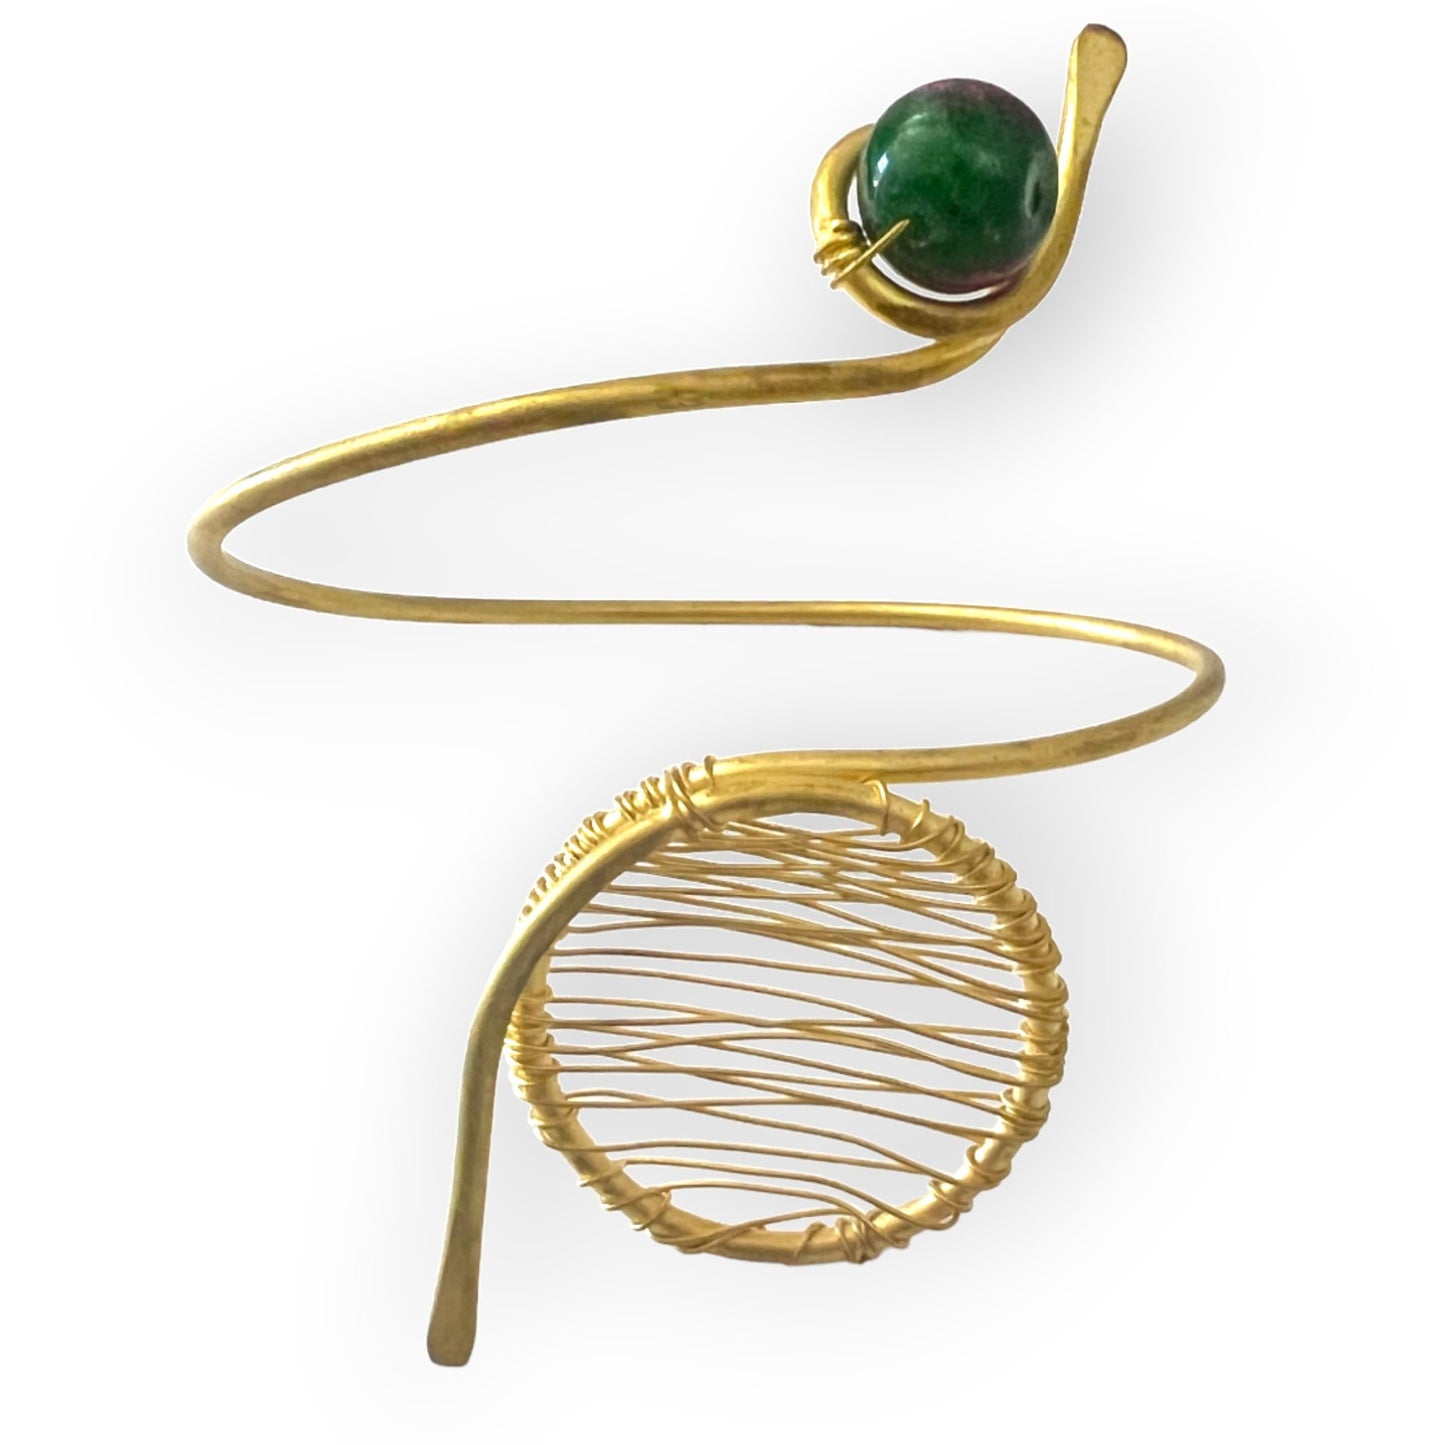 Modern inspired serpentine styled bracelet - Sundara Joon